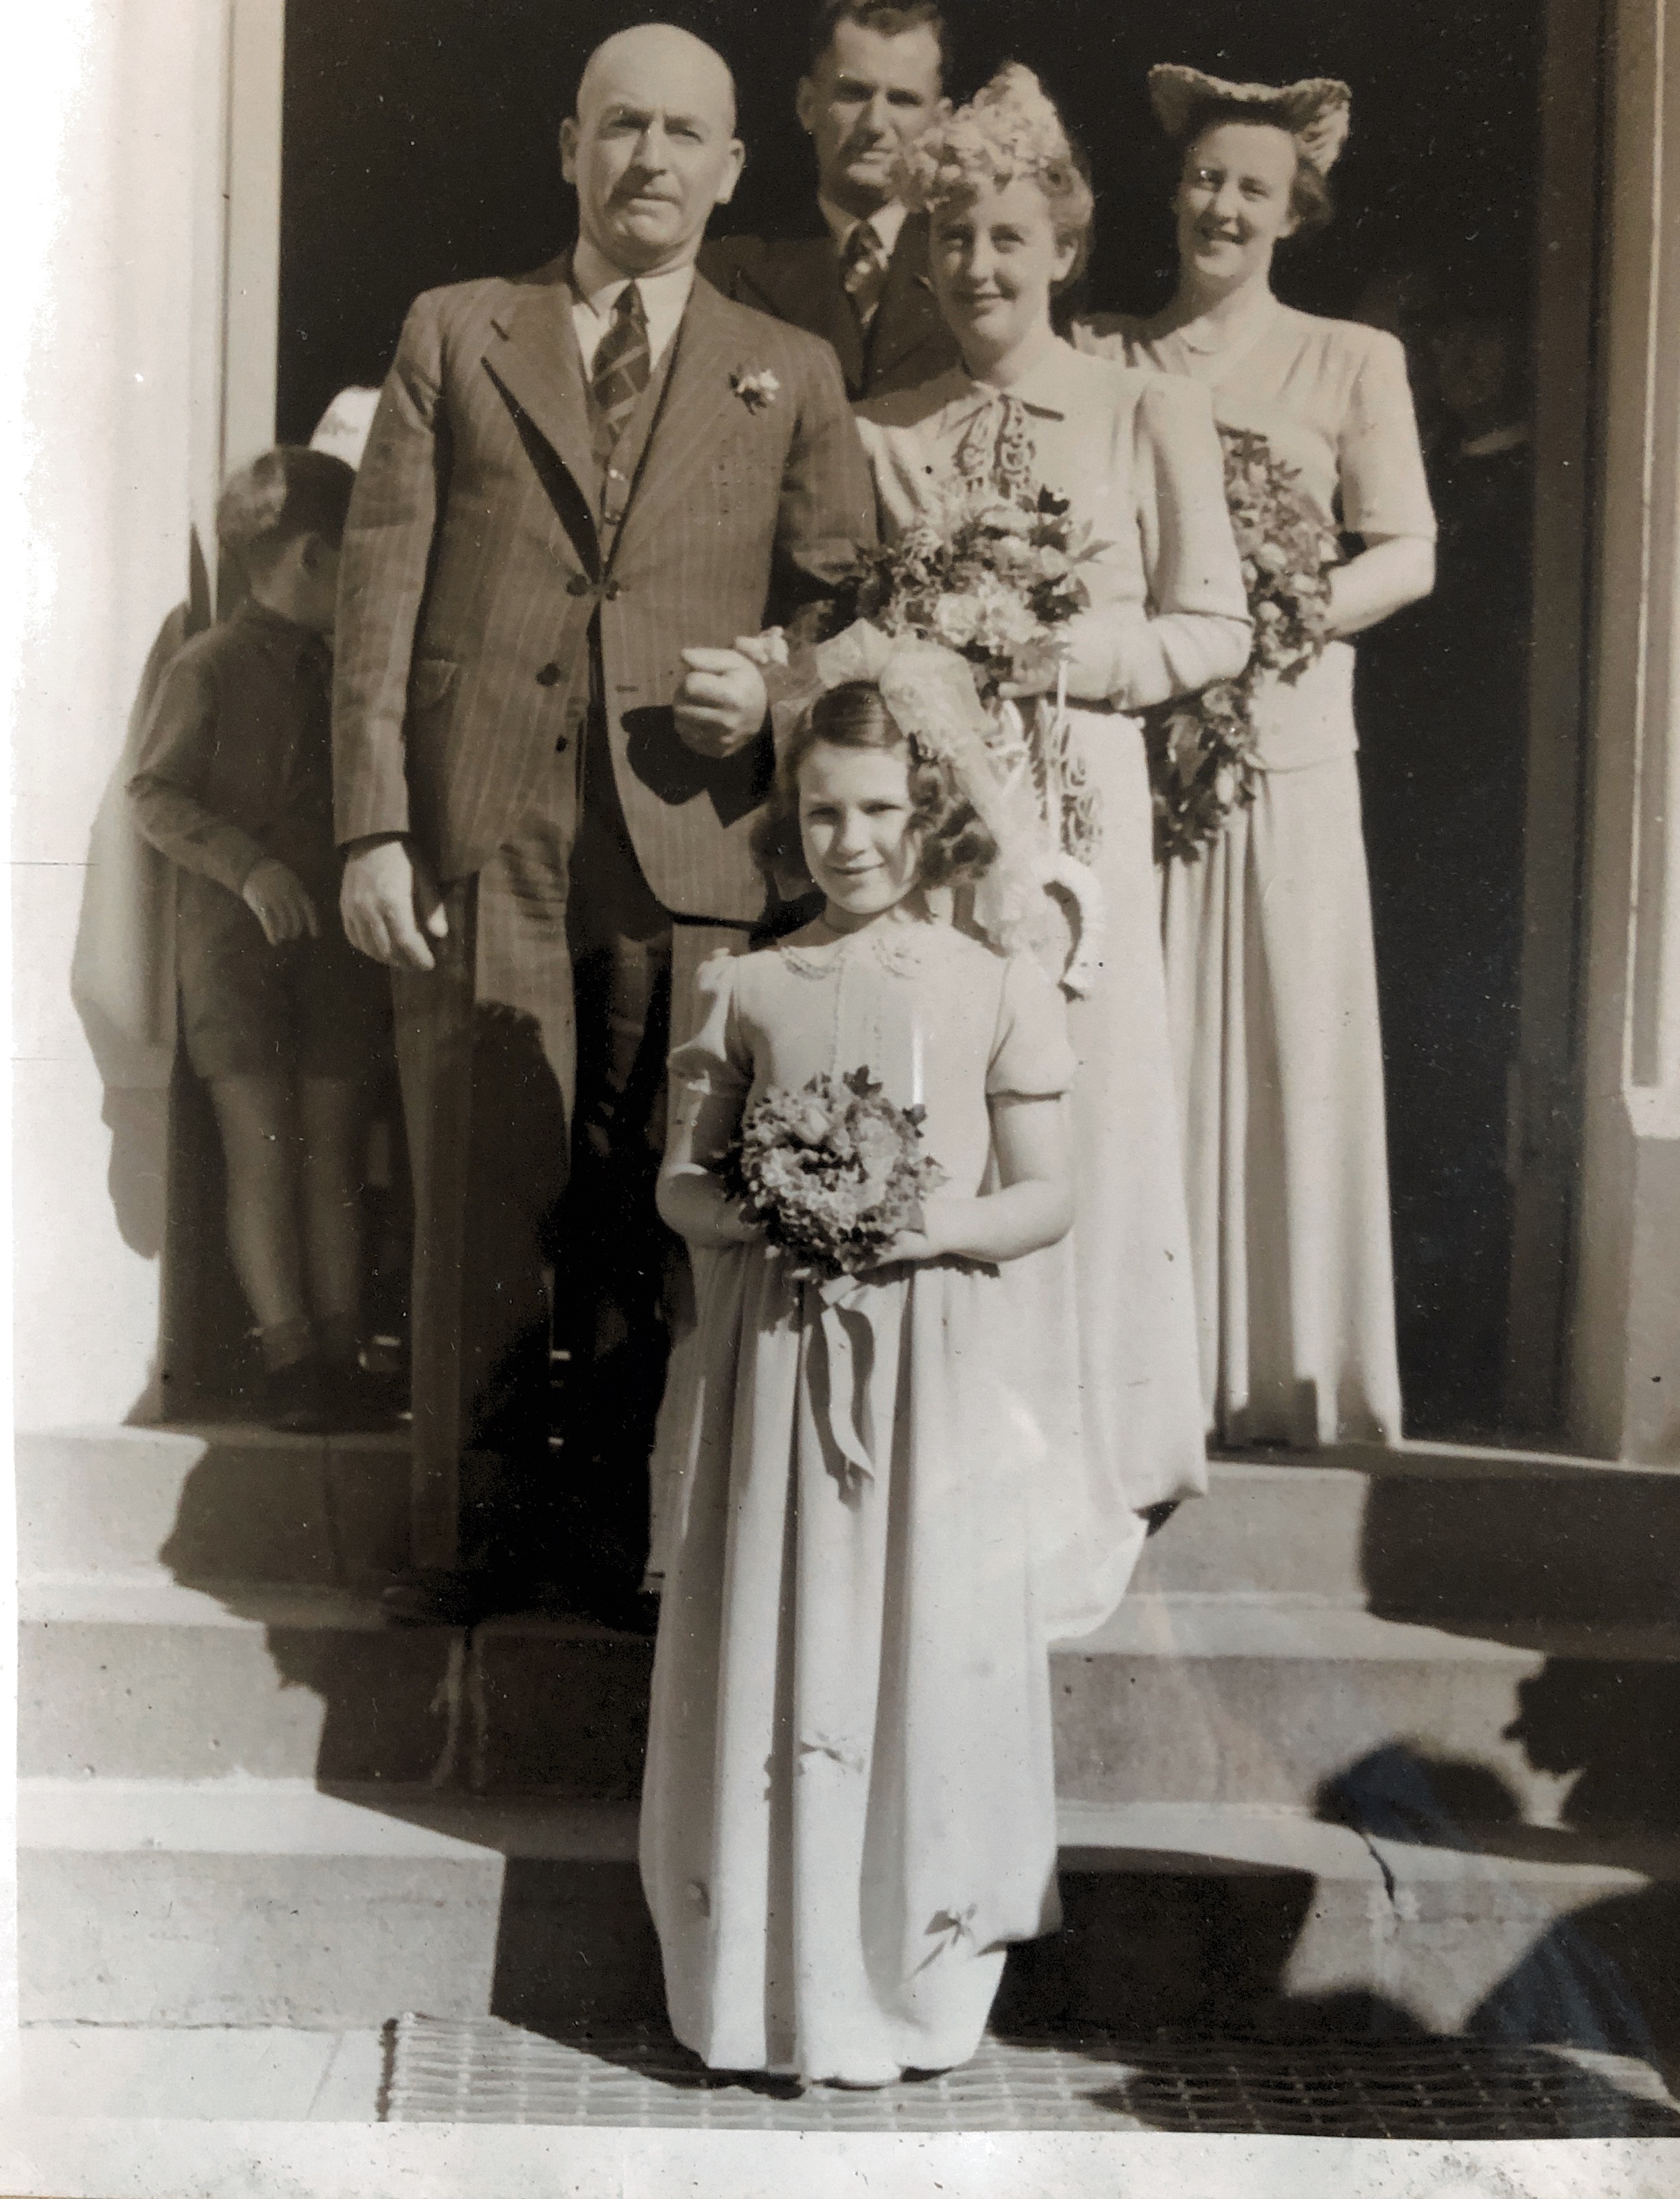 Jack & Billie Rintoul wedding photo. 1940’s